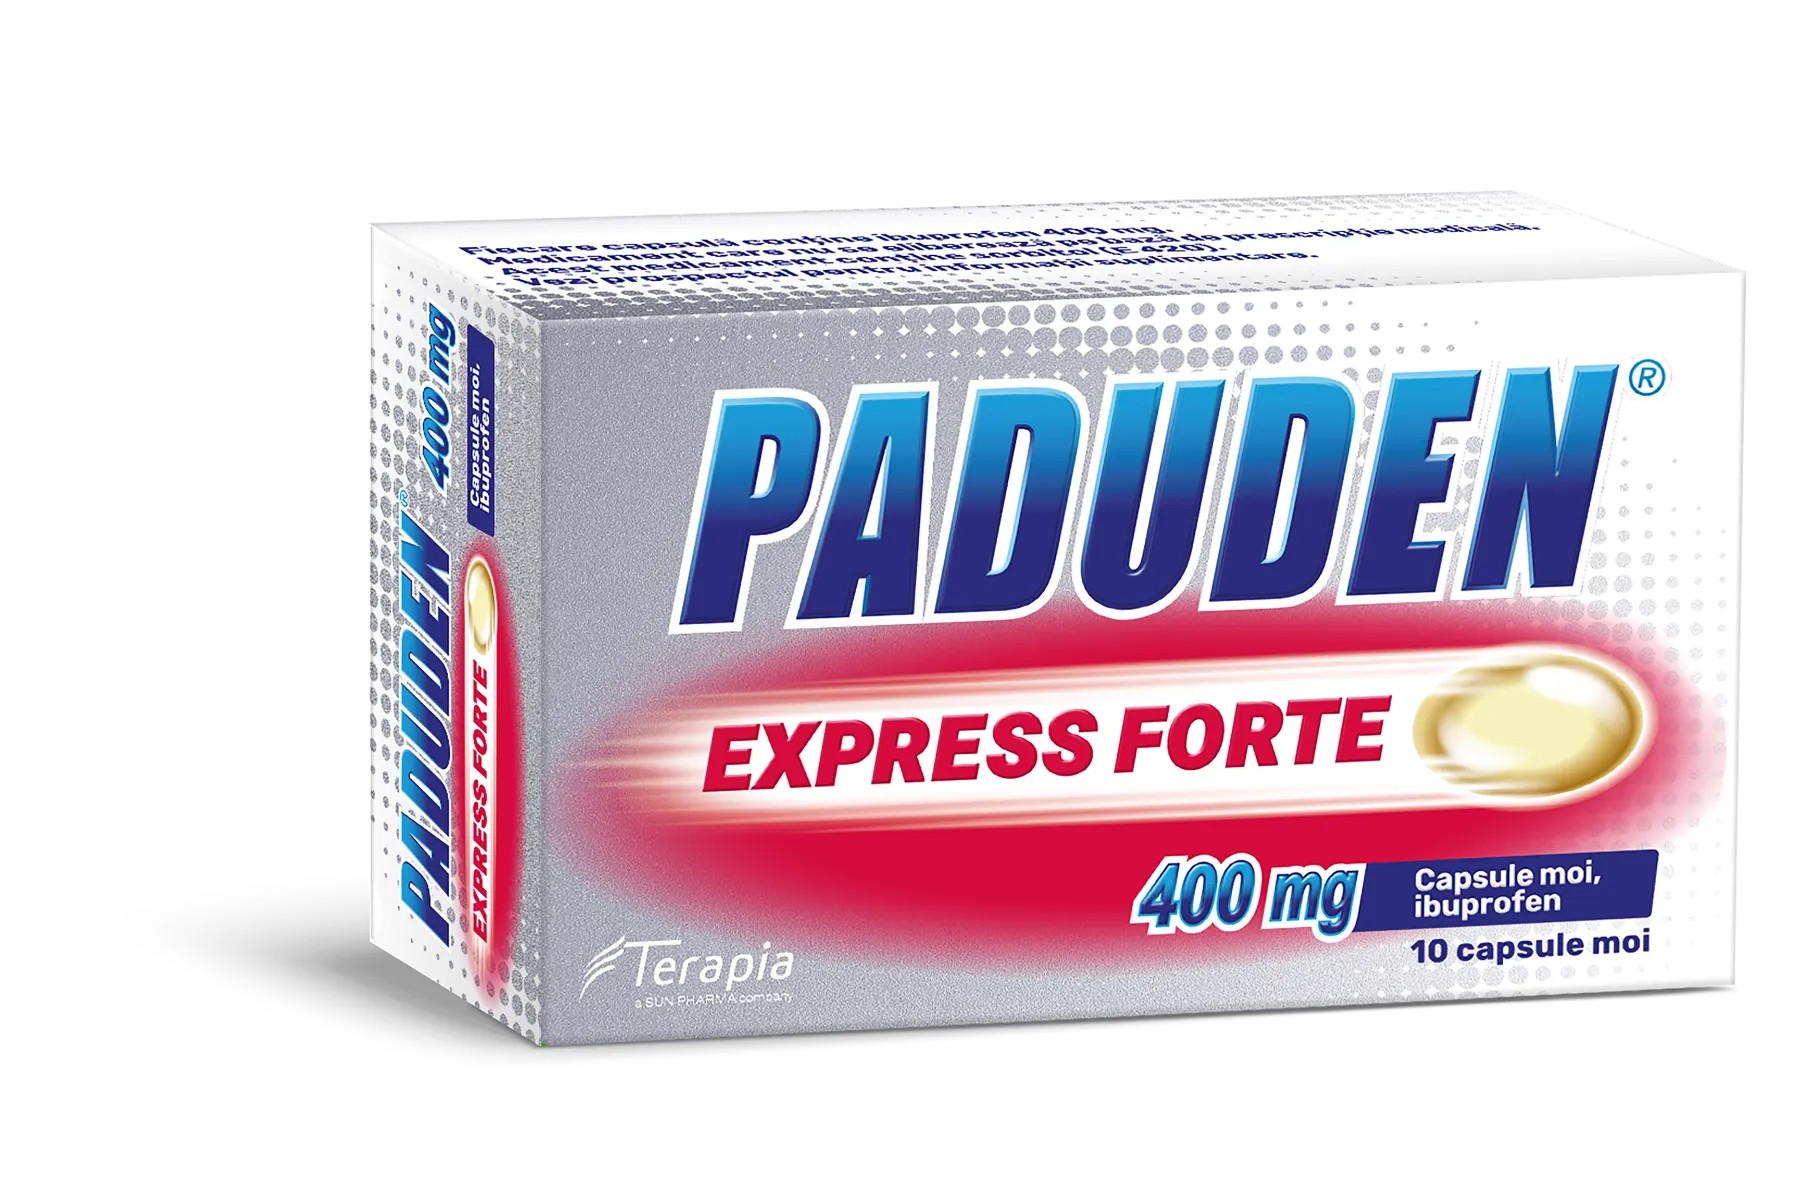 Paduden Express Forte 400mg, 10 capsule moi, Terapia 